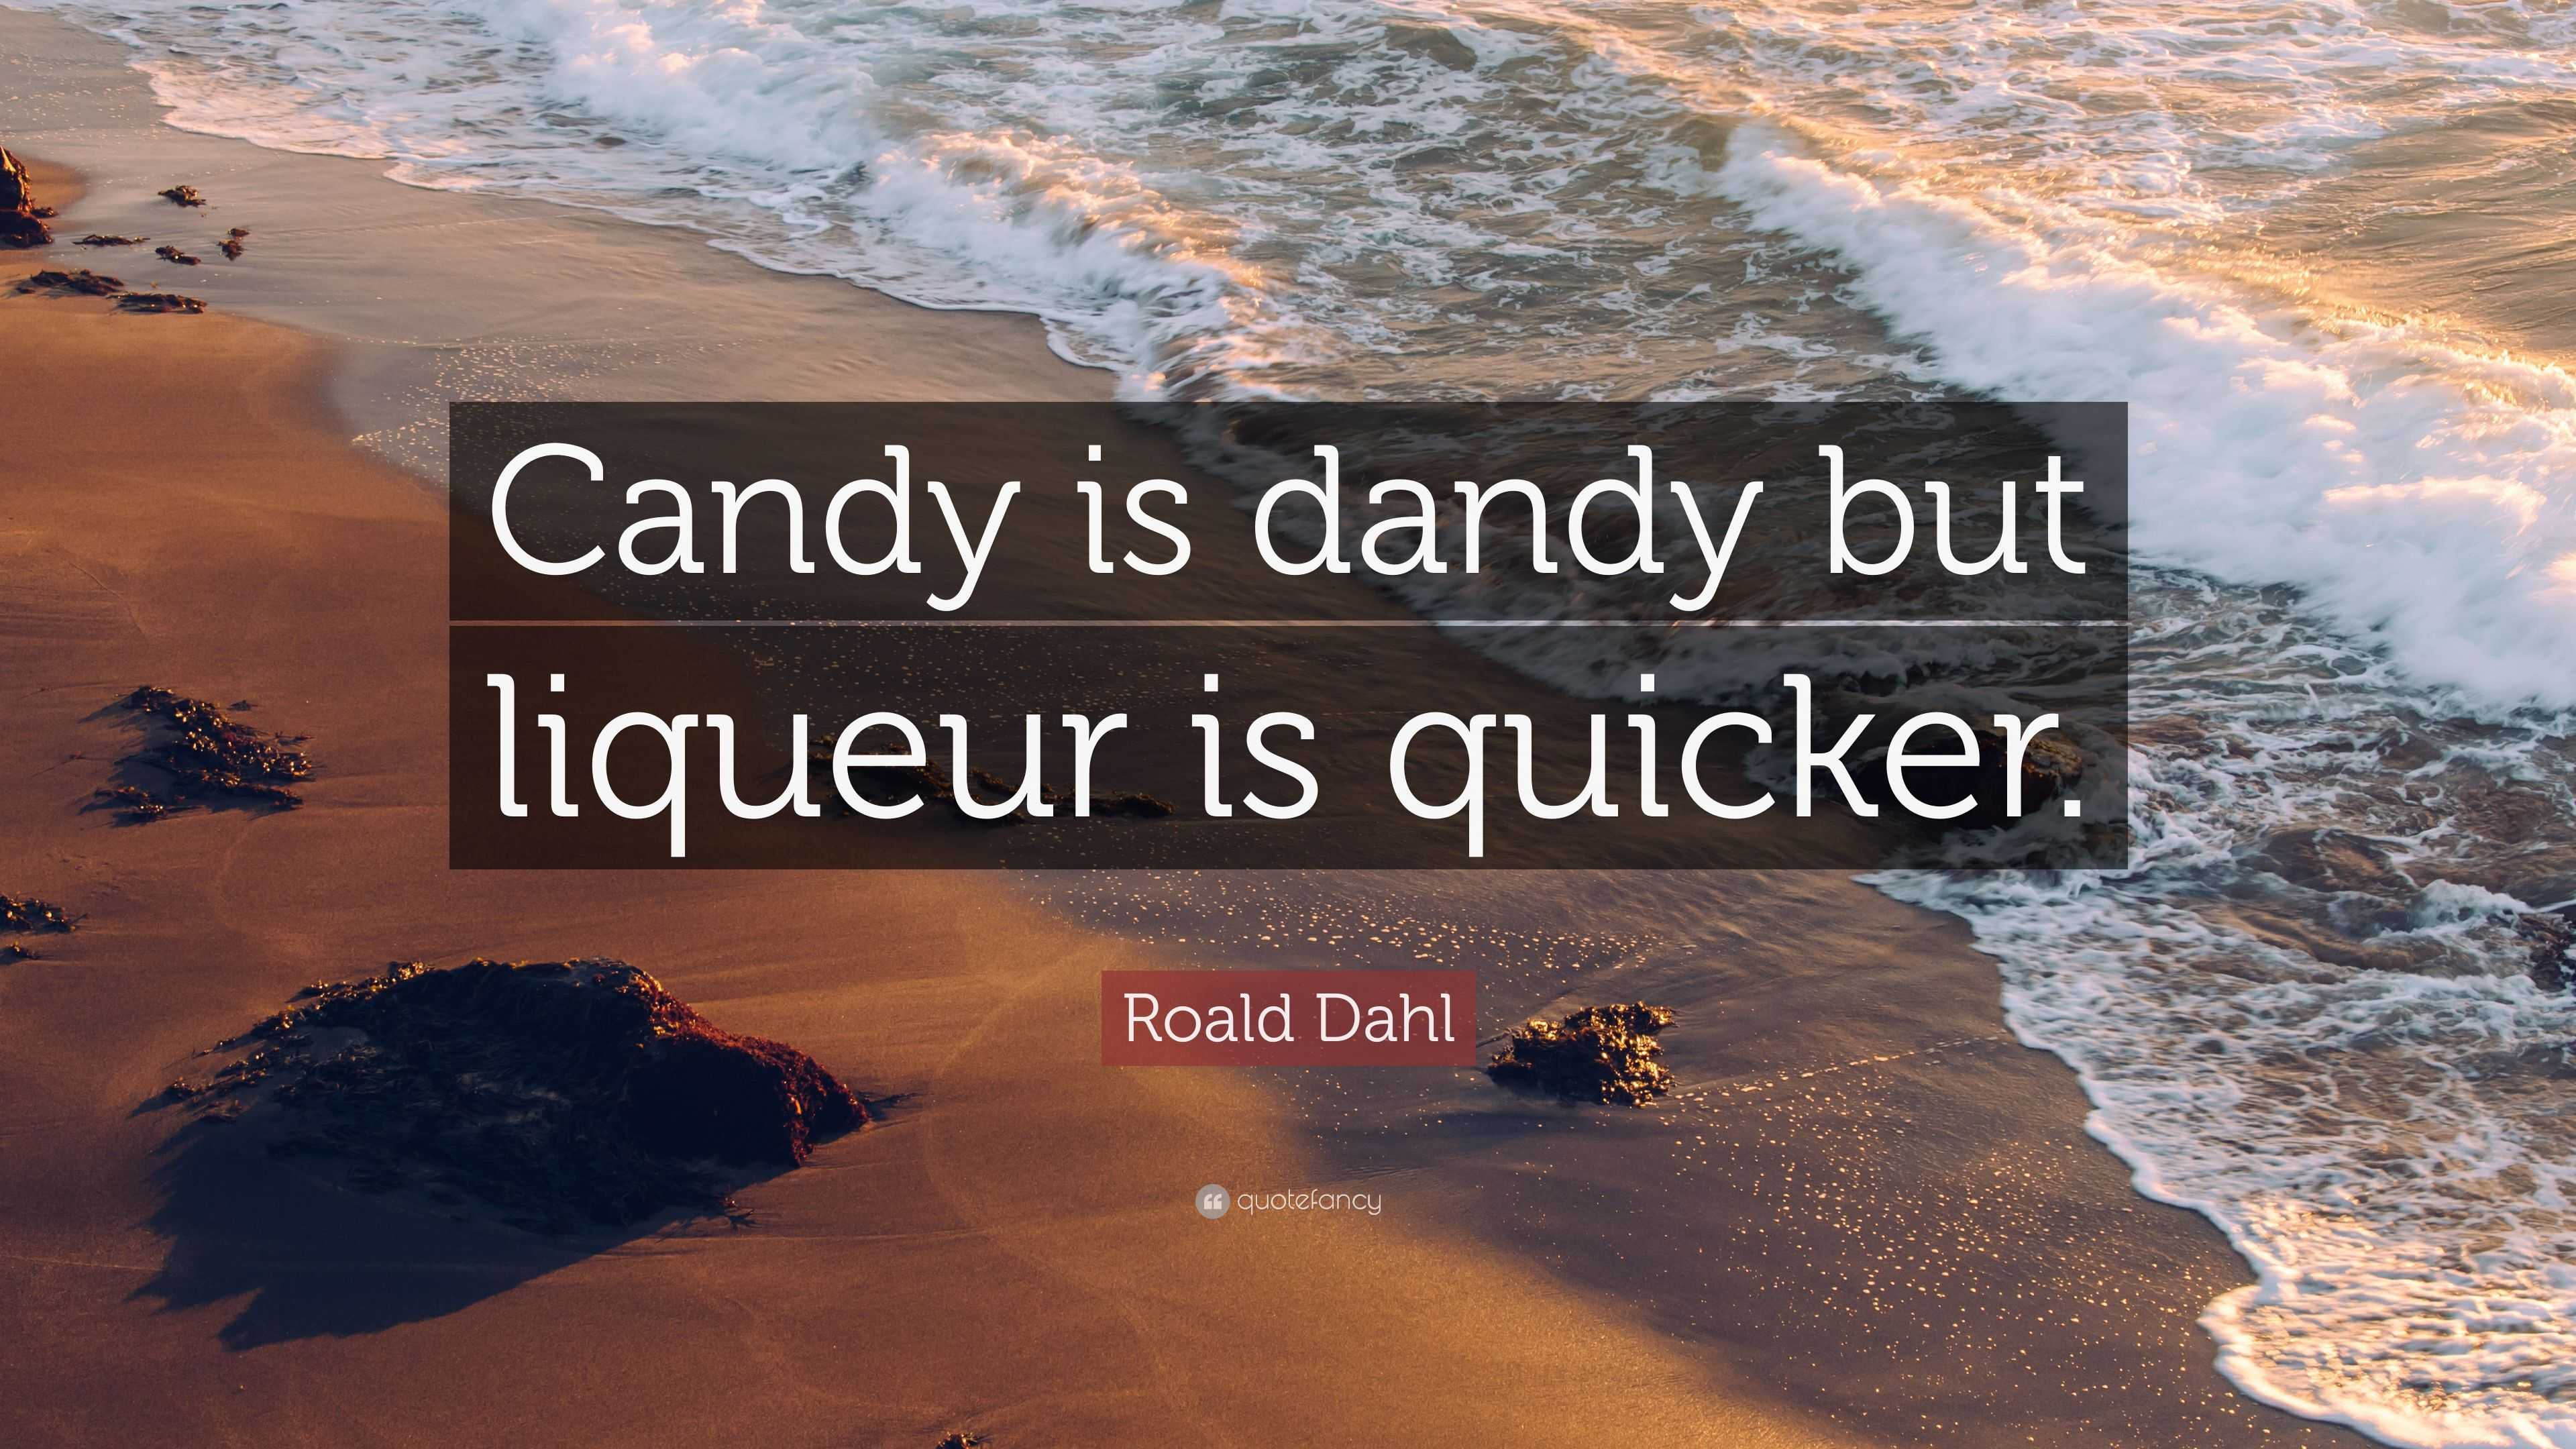 Roald Dahl Quote: “Candy is dandy but liqueur is quicker.”